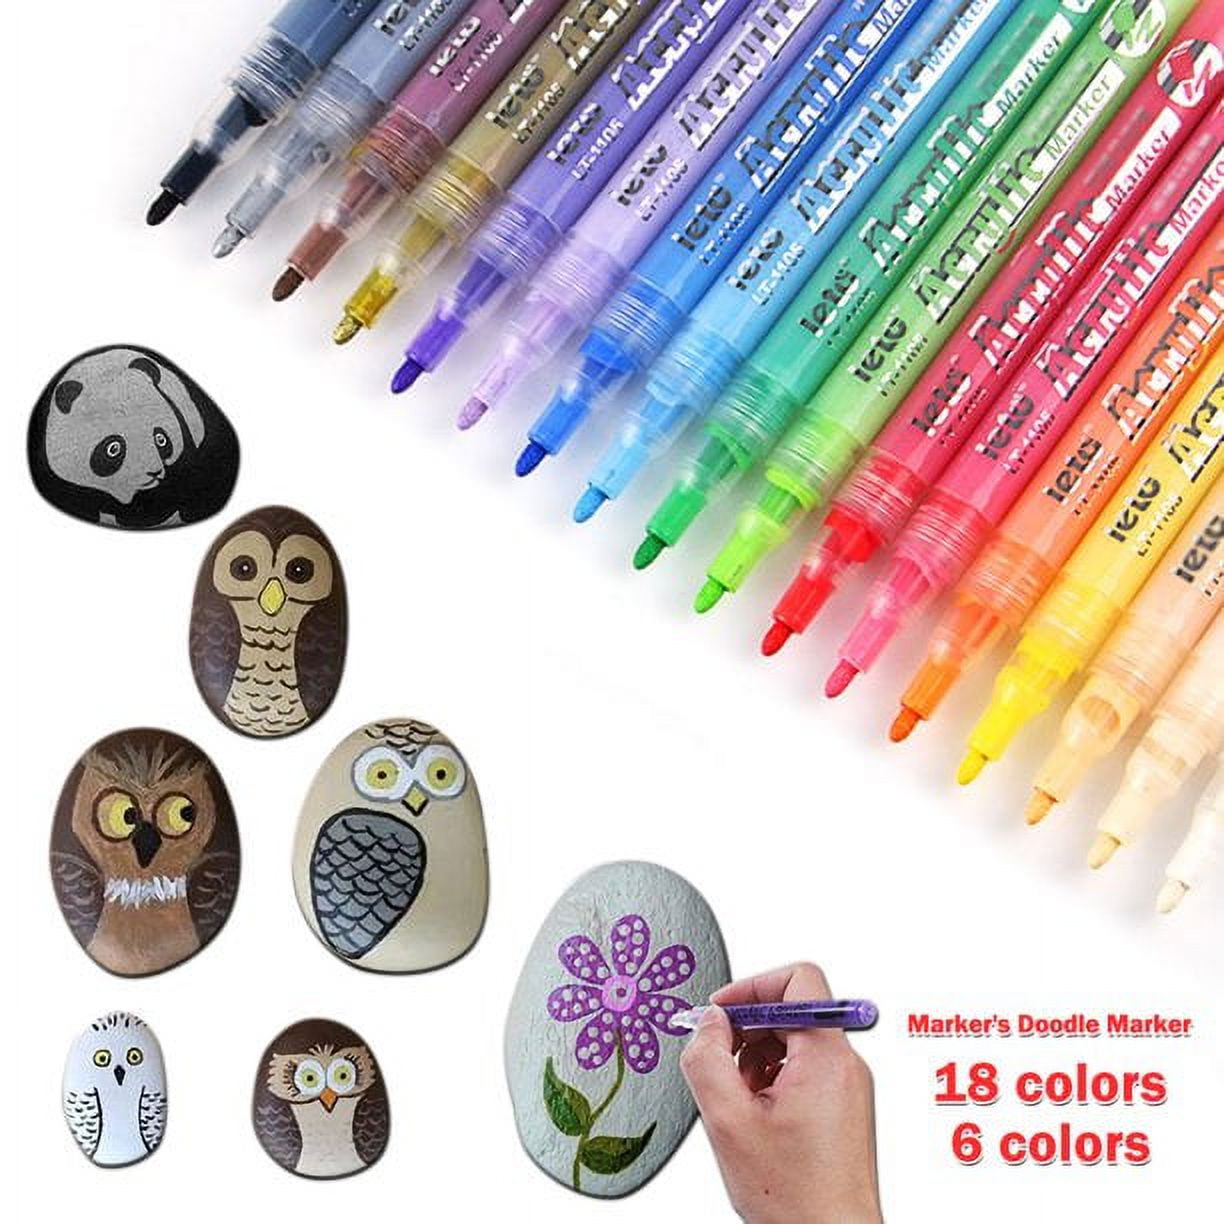 Voiskie white acrylic paint pens (6 pack) variety pack - extra fine 0.7mm &  medium tip